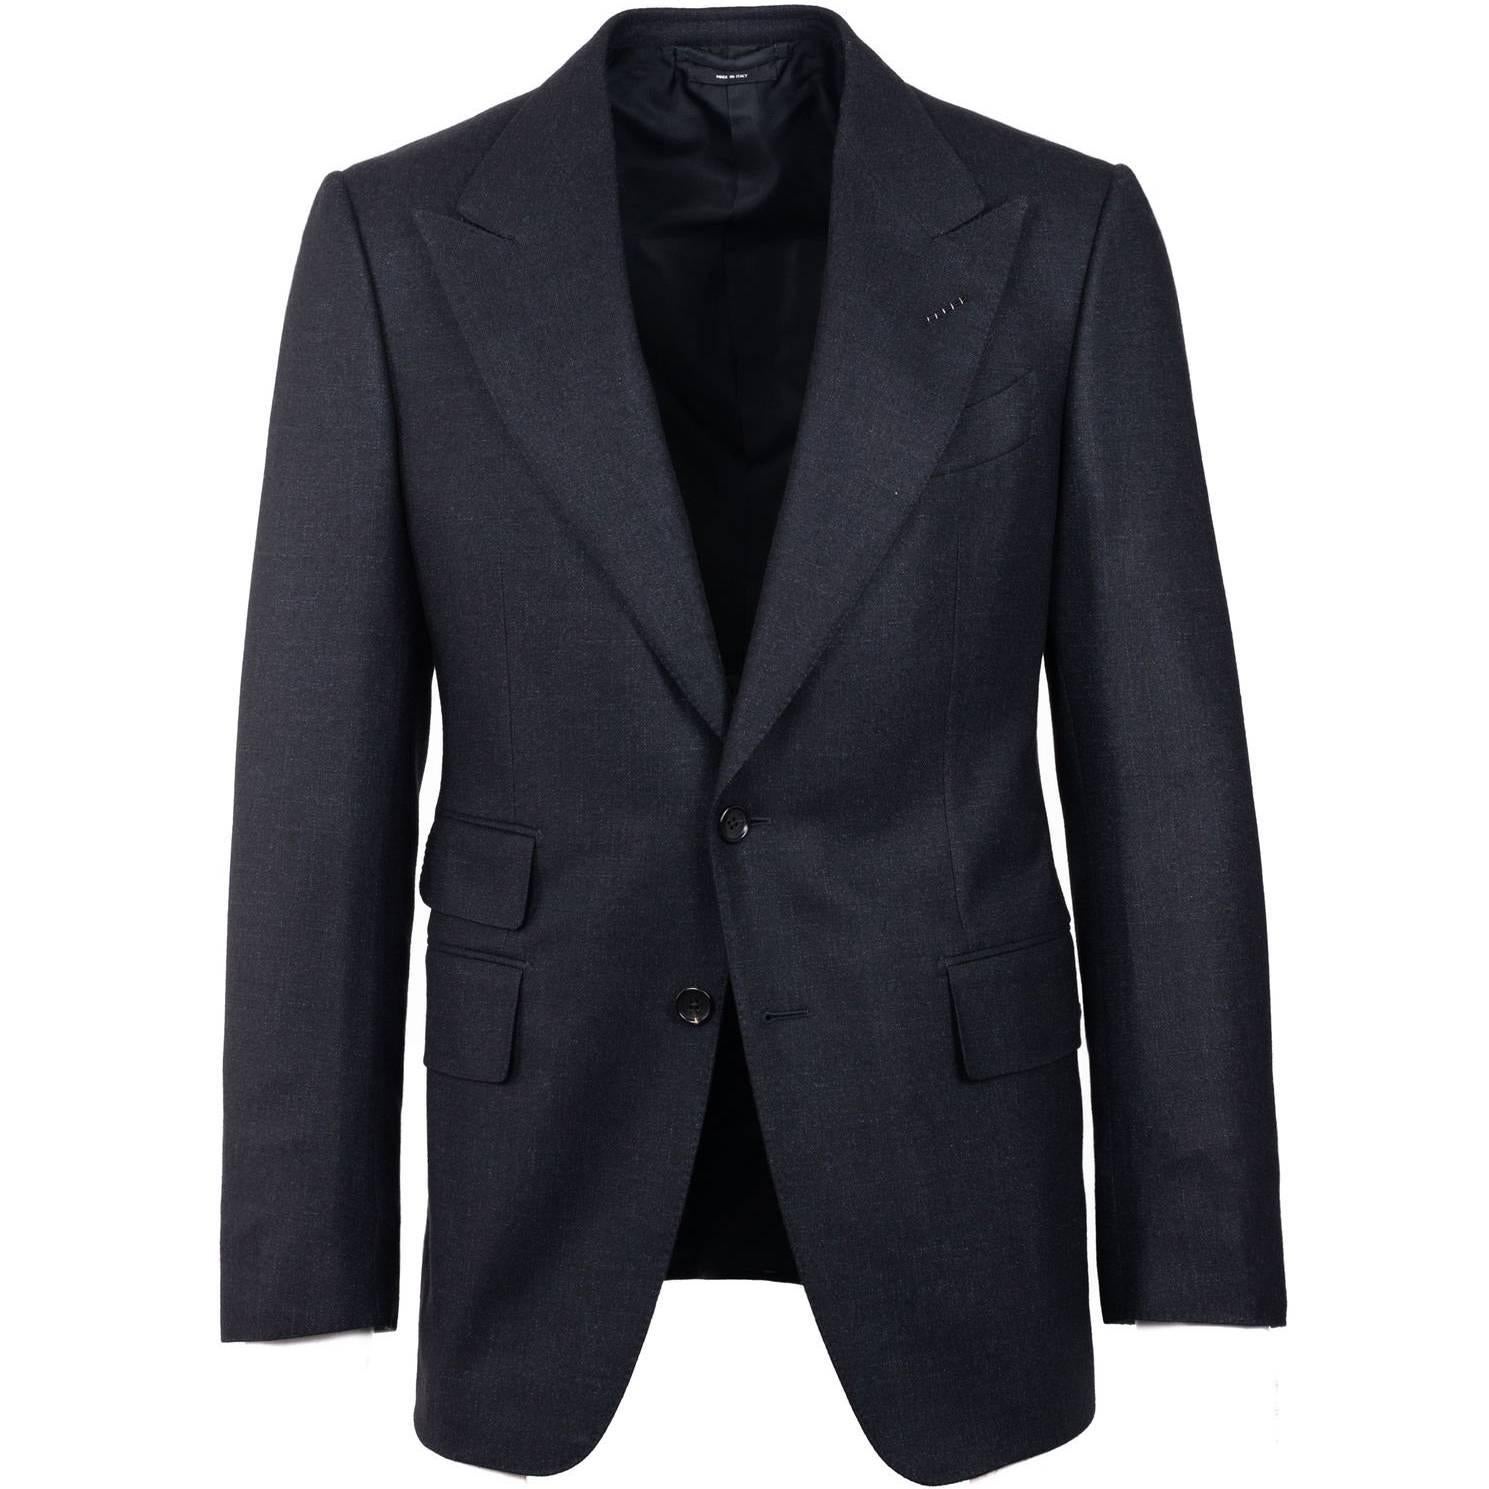 New Tom Ford Men's 100% Wool Shelton Sports Coat Jacket Blazer 48R/38R ret $3750 For Sale